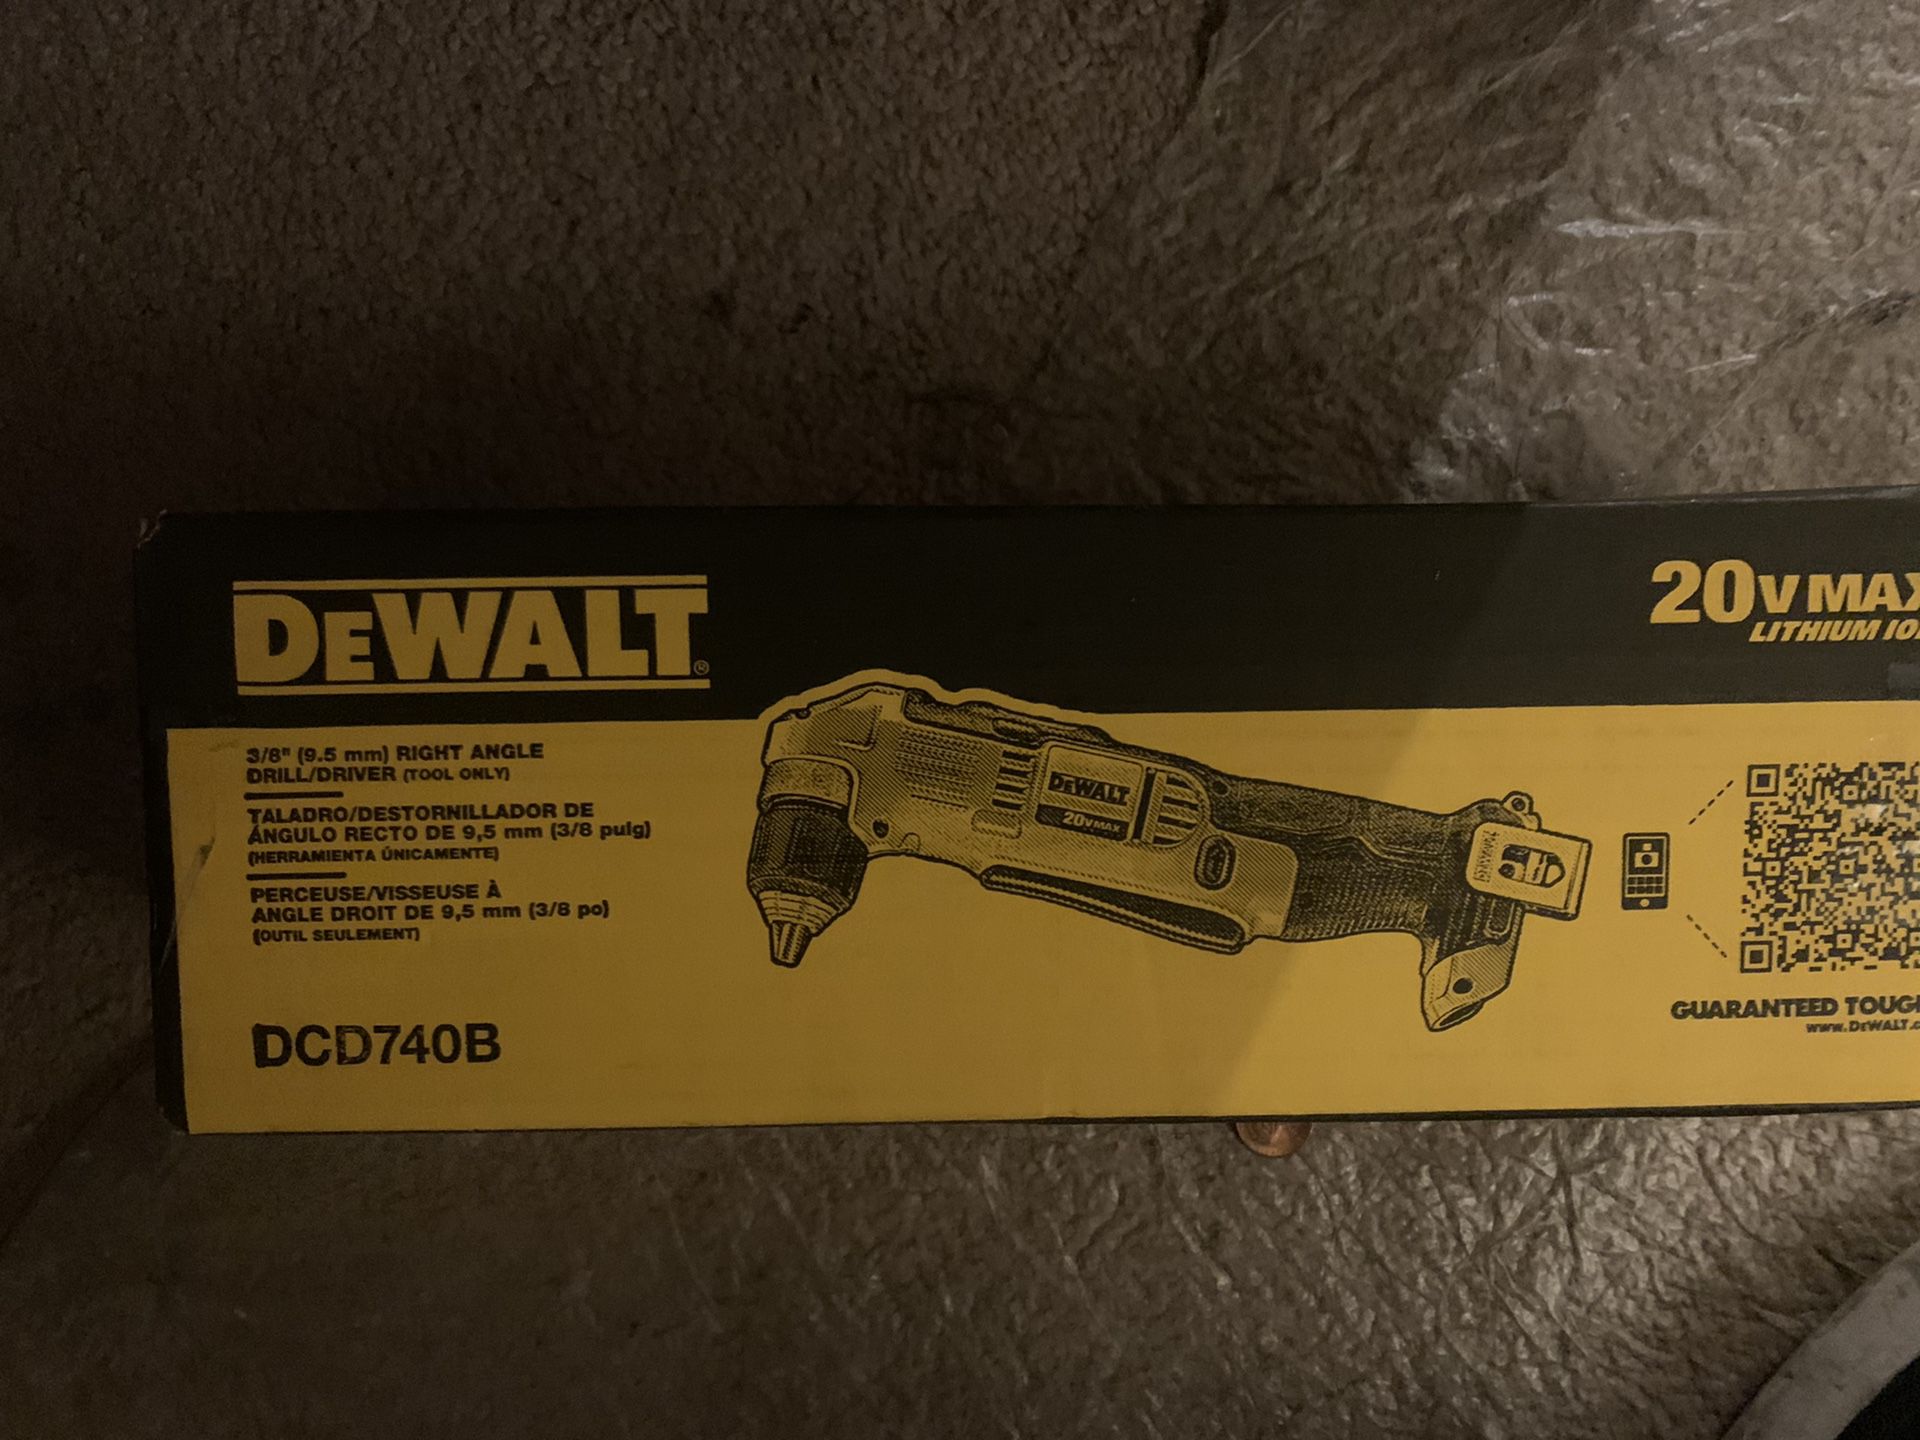 DeWalt 20v 3/8” right angle drill/driver. DCD740B